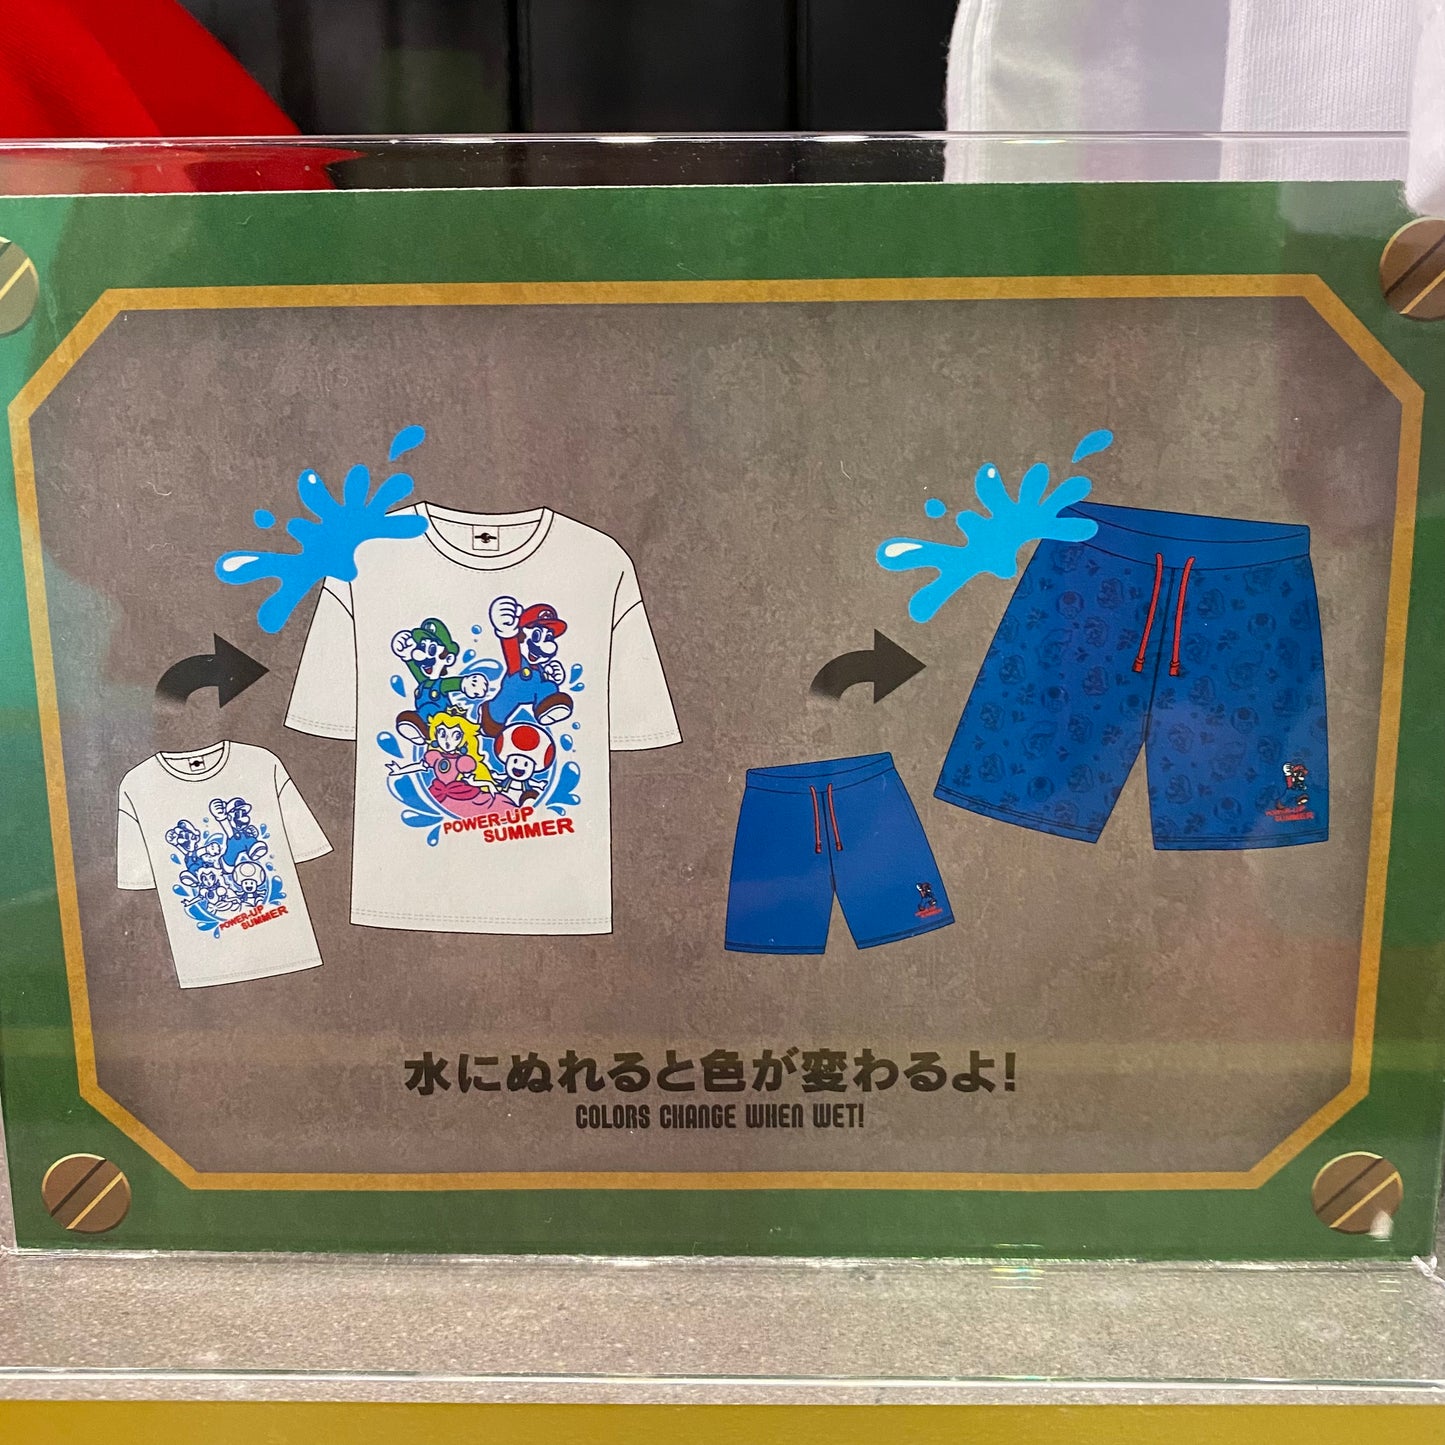 【訂貨】USJ Mario Power Up Summer 濕水變色 Tshirt / 短褲（成人）